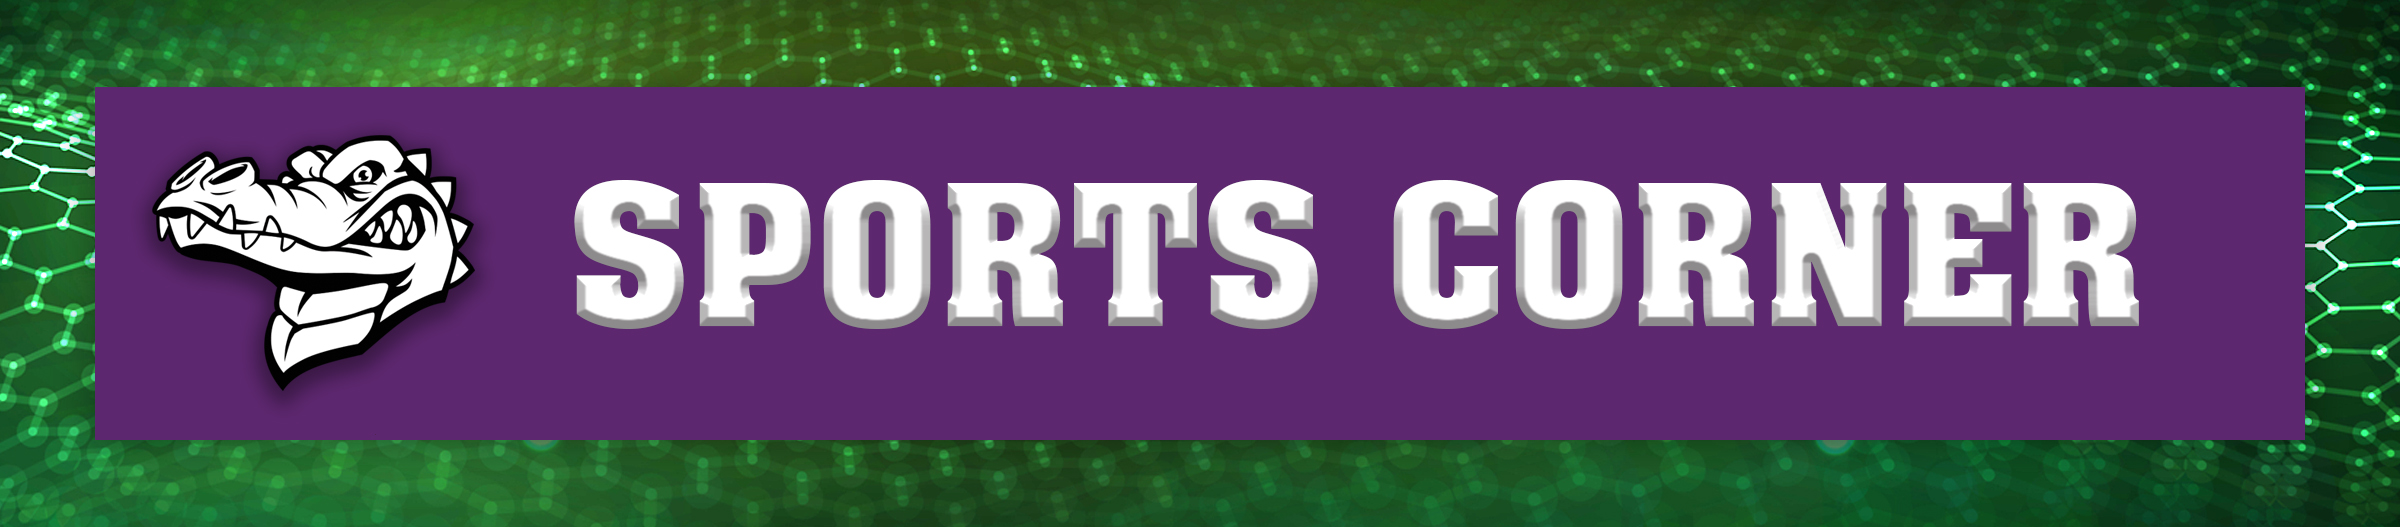 Sports Corner logo